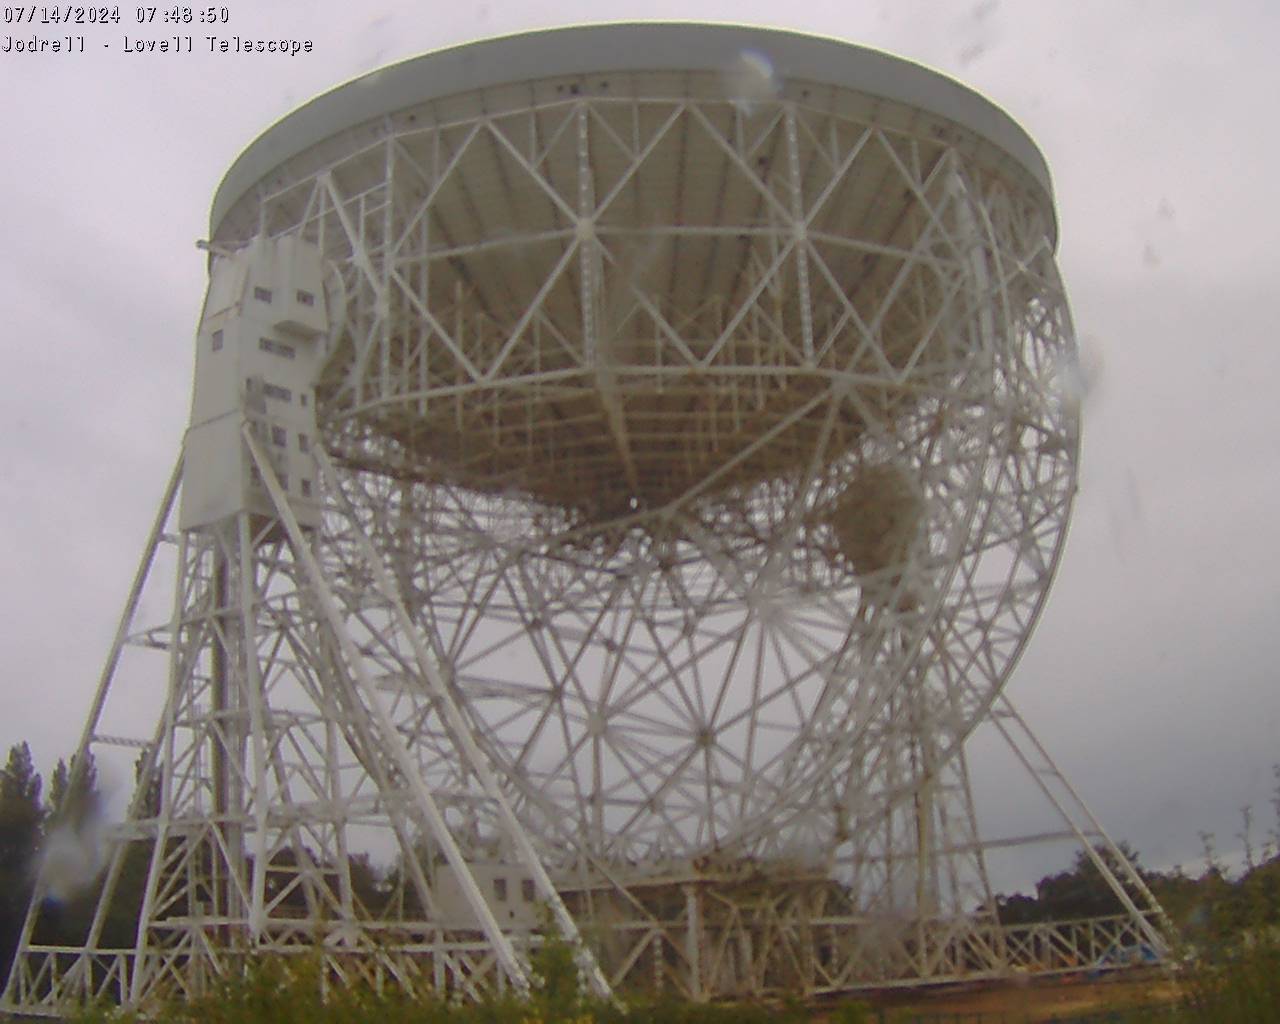 Jodrell Bank Observatory Thu. 07:49